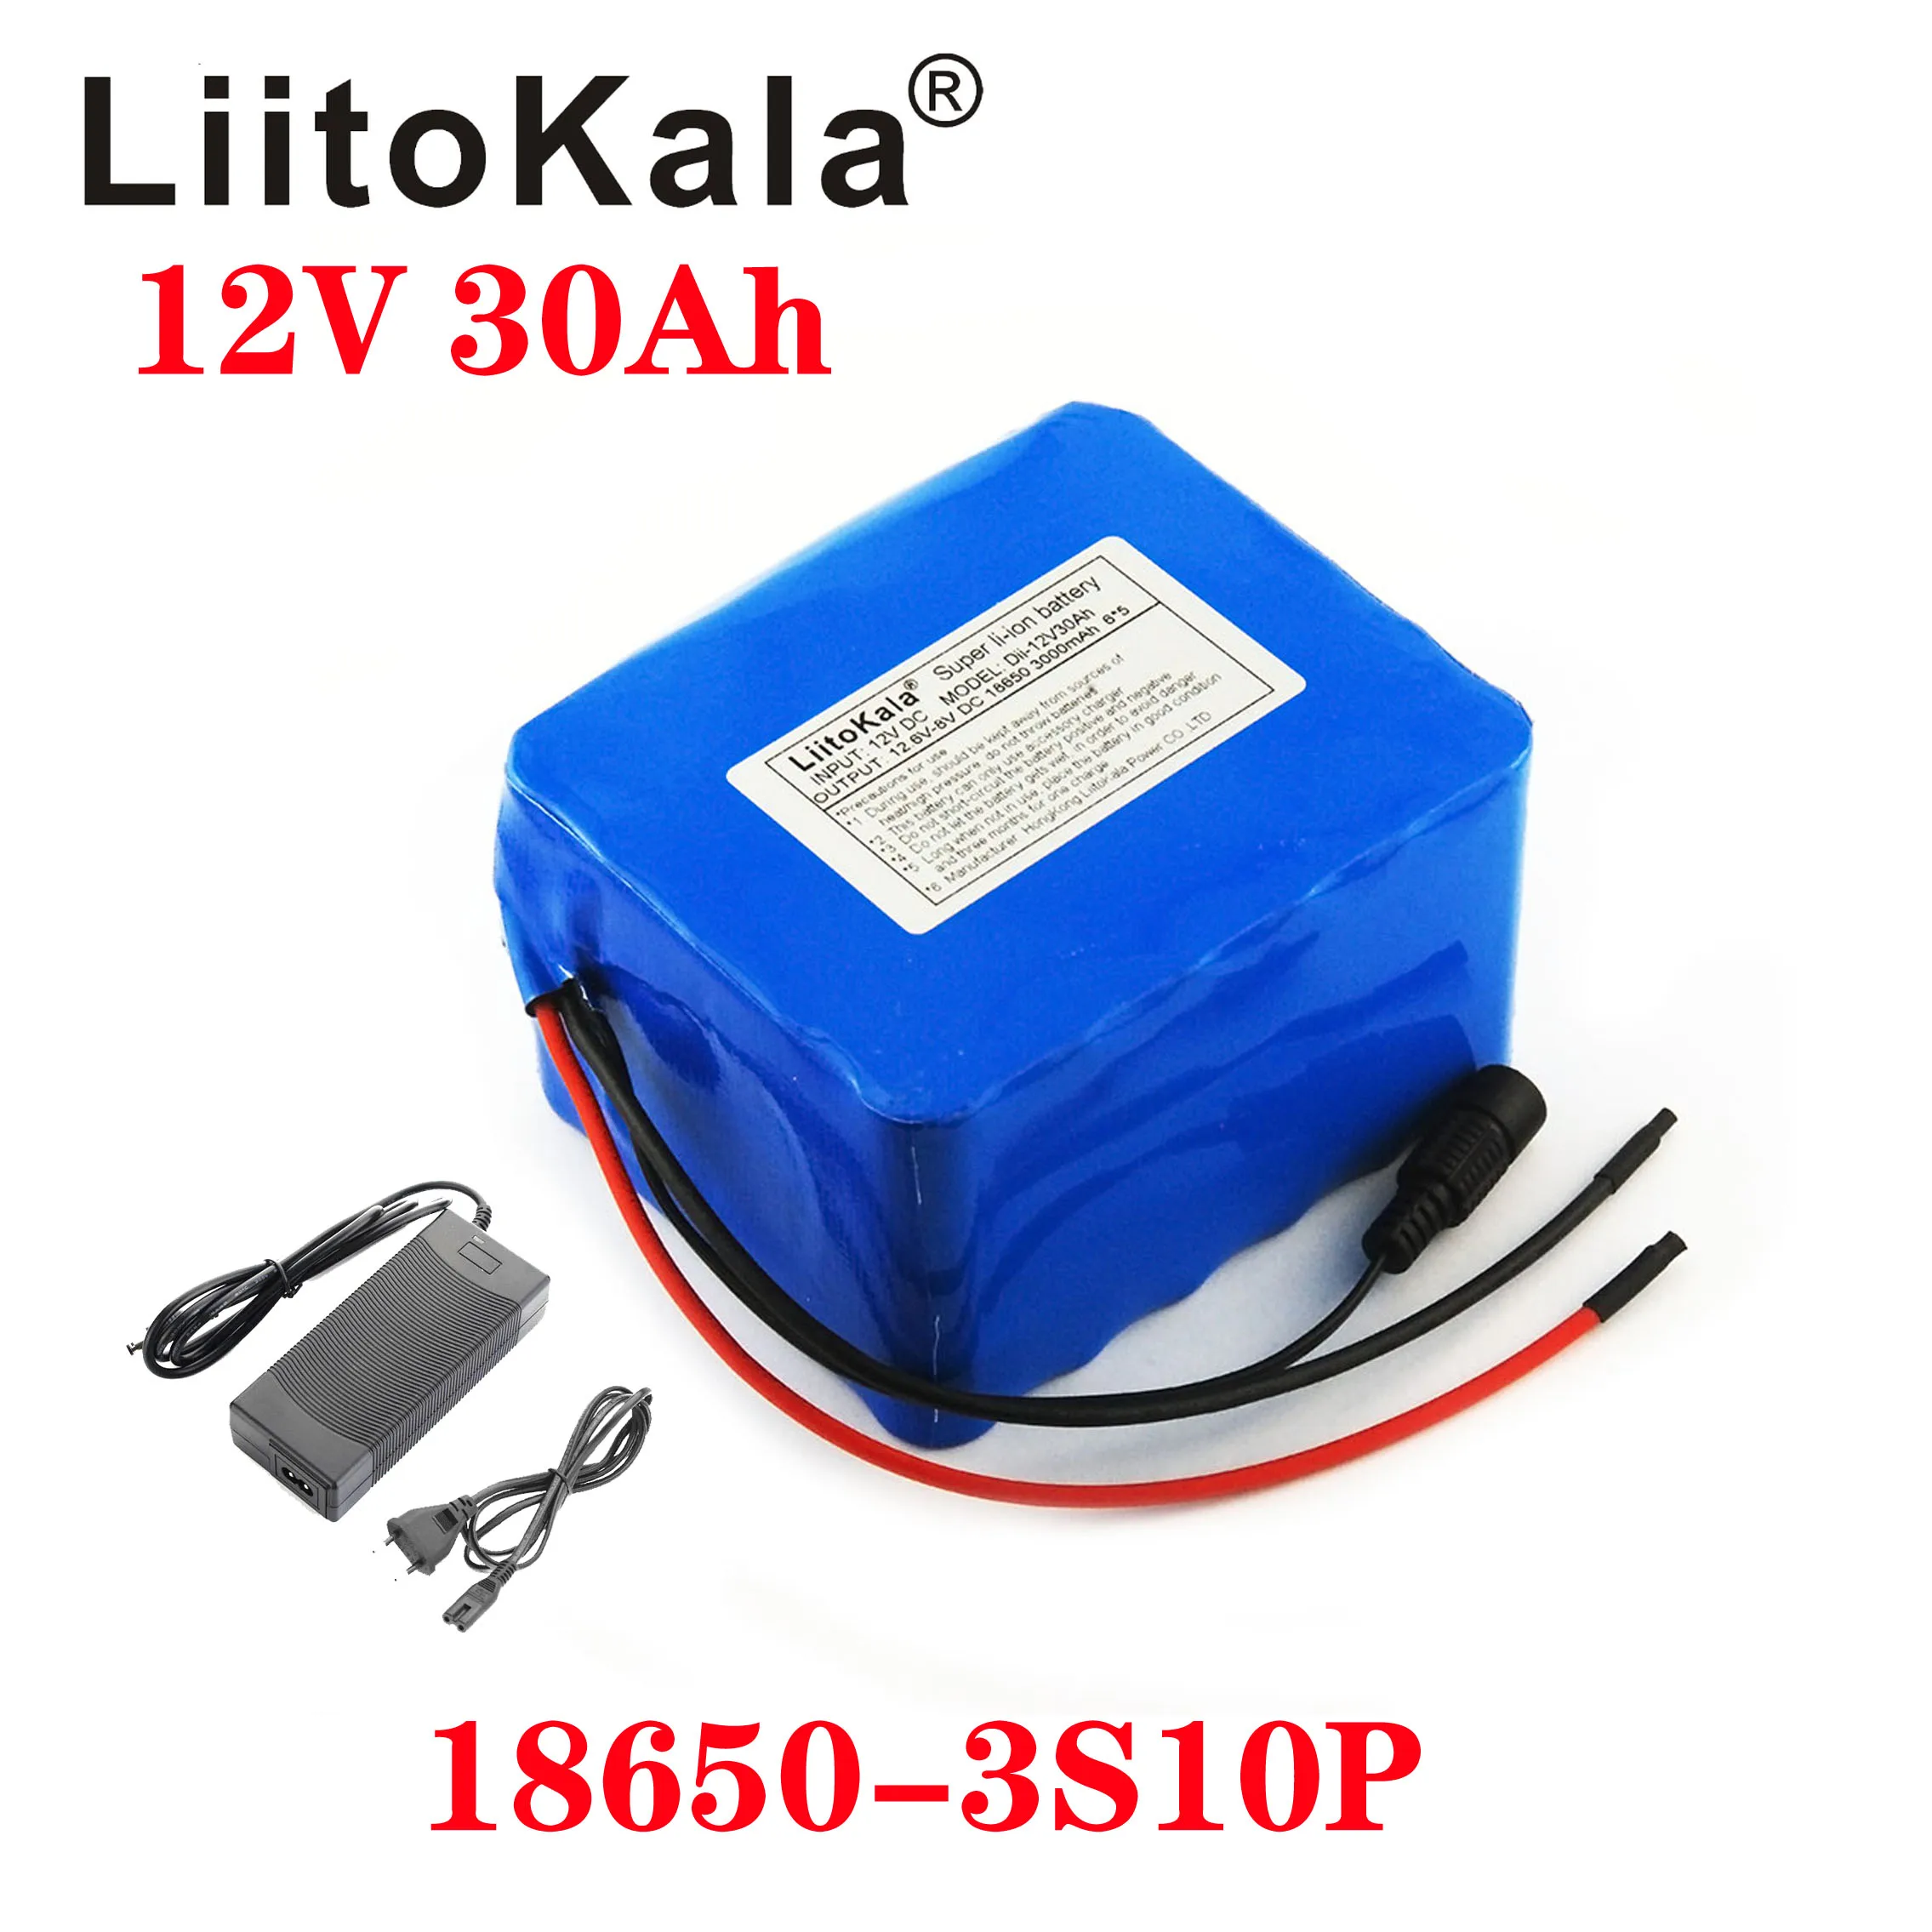 LiitoKala 12v 30ah 18650 3000mah 3S10P battery high current larg